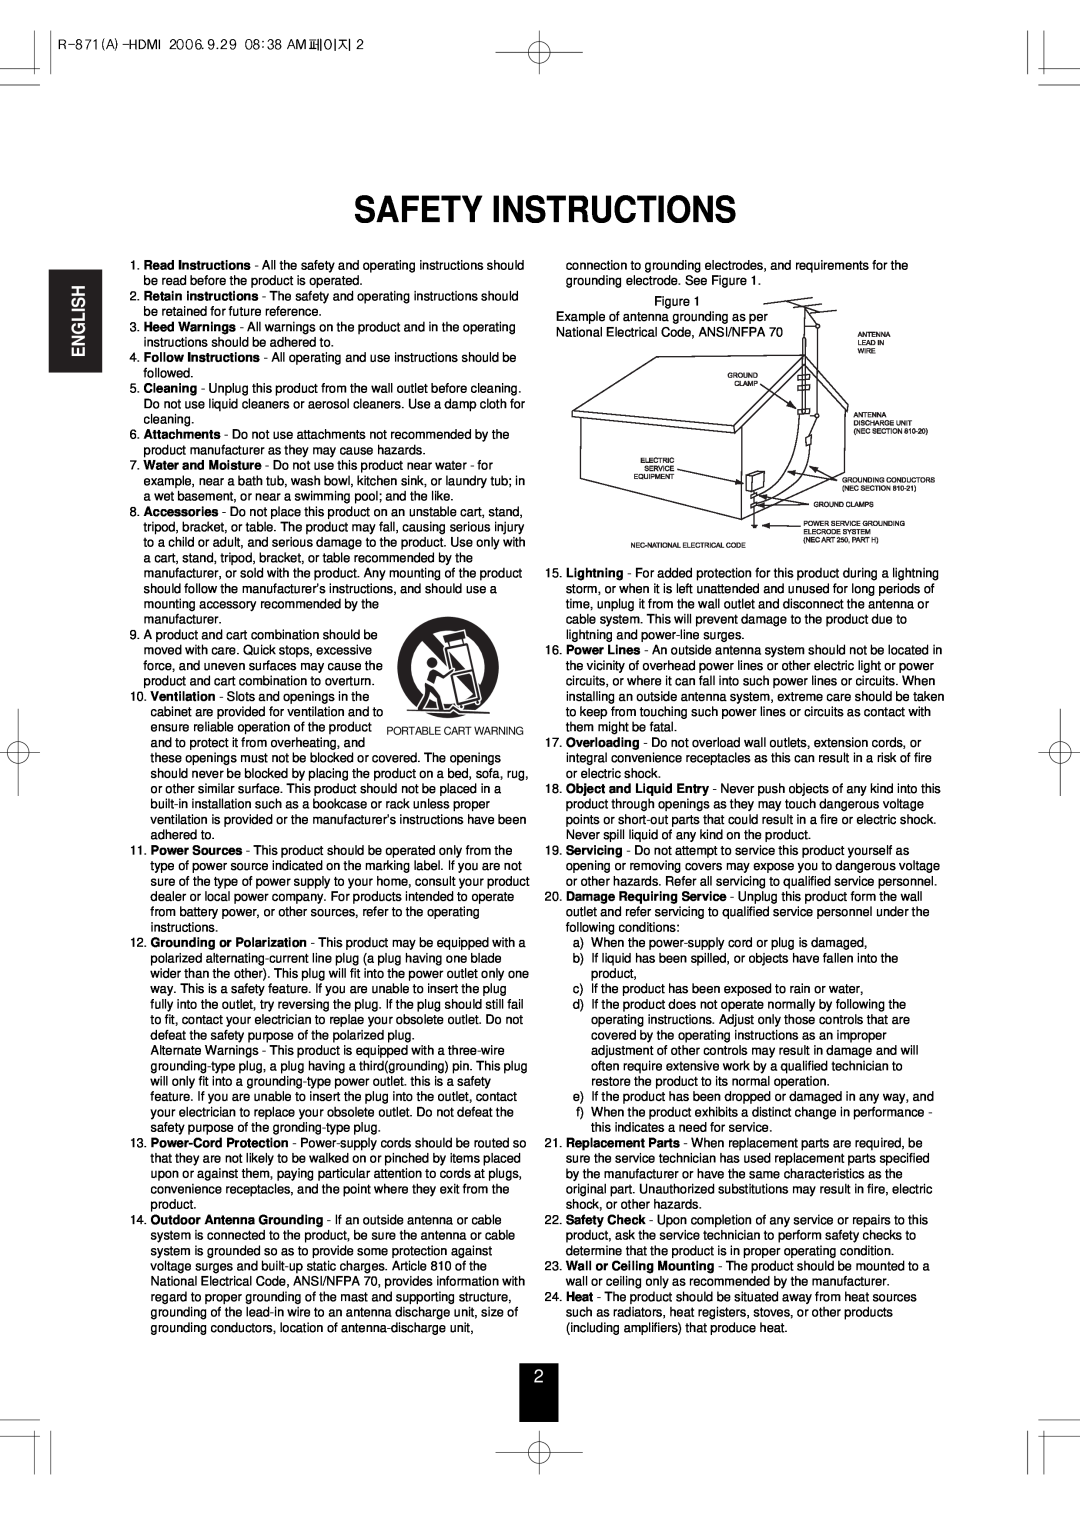 Sherwood R-871 manual English, Safety Instructions 